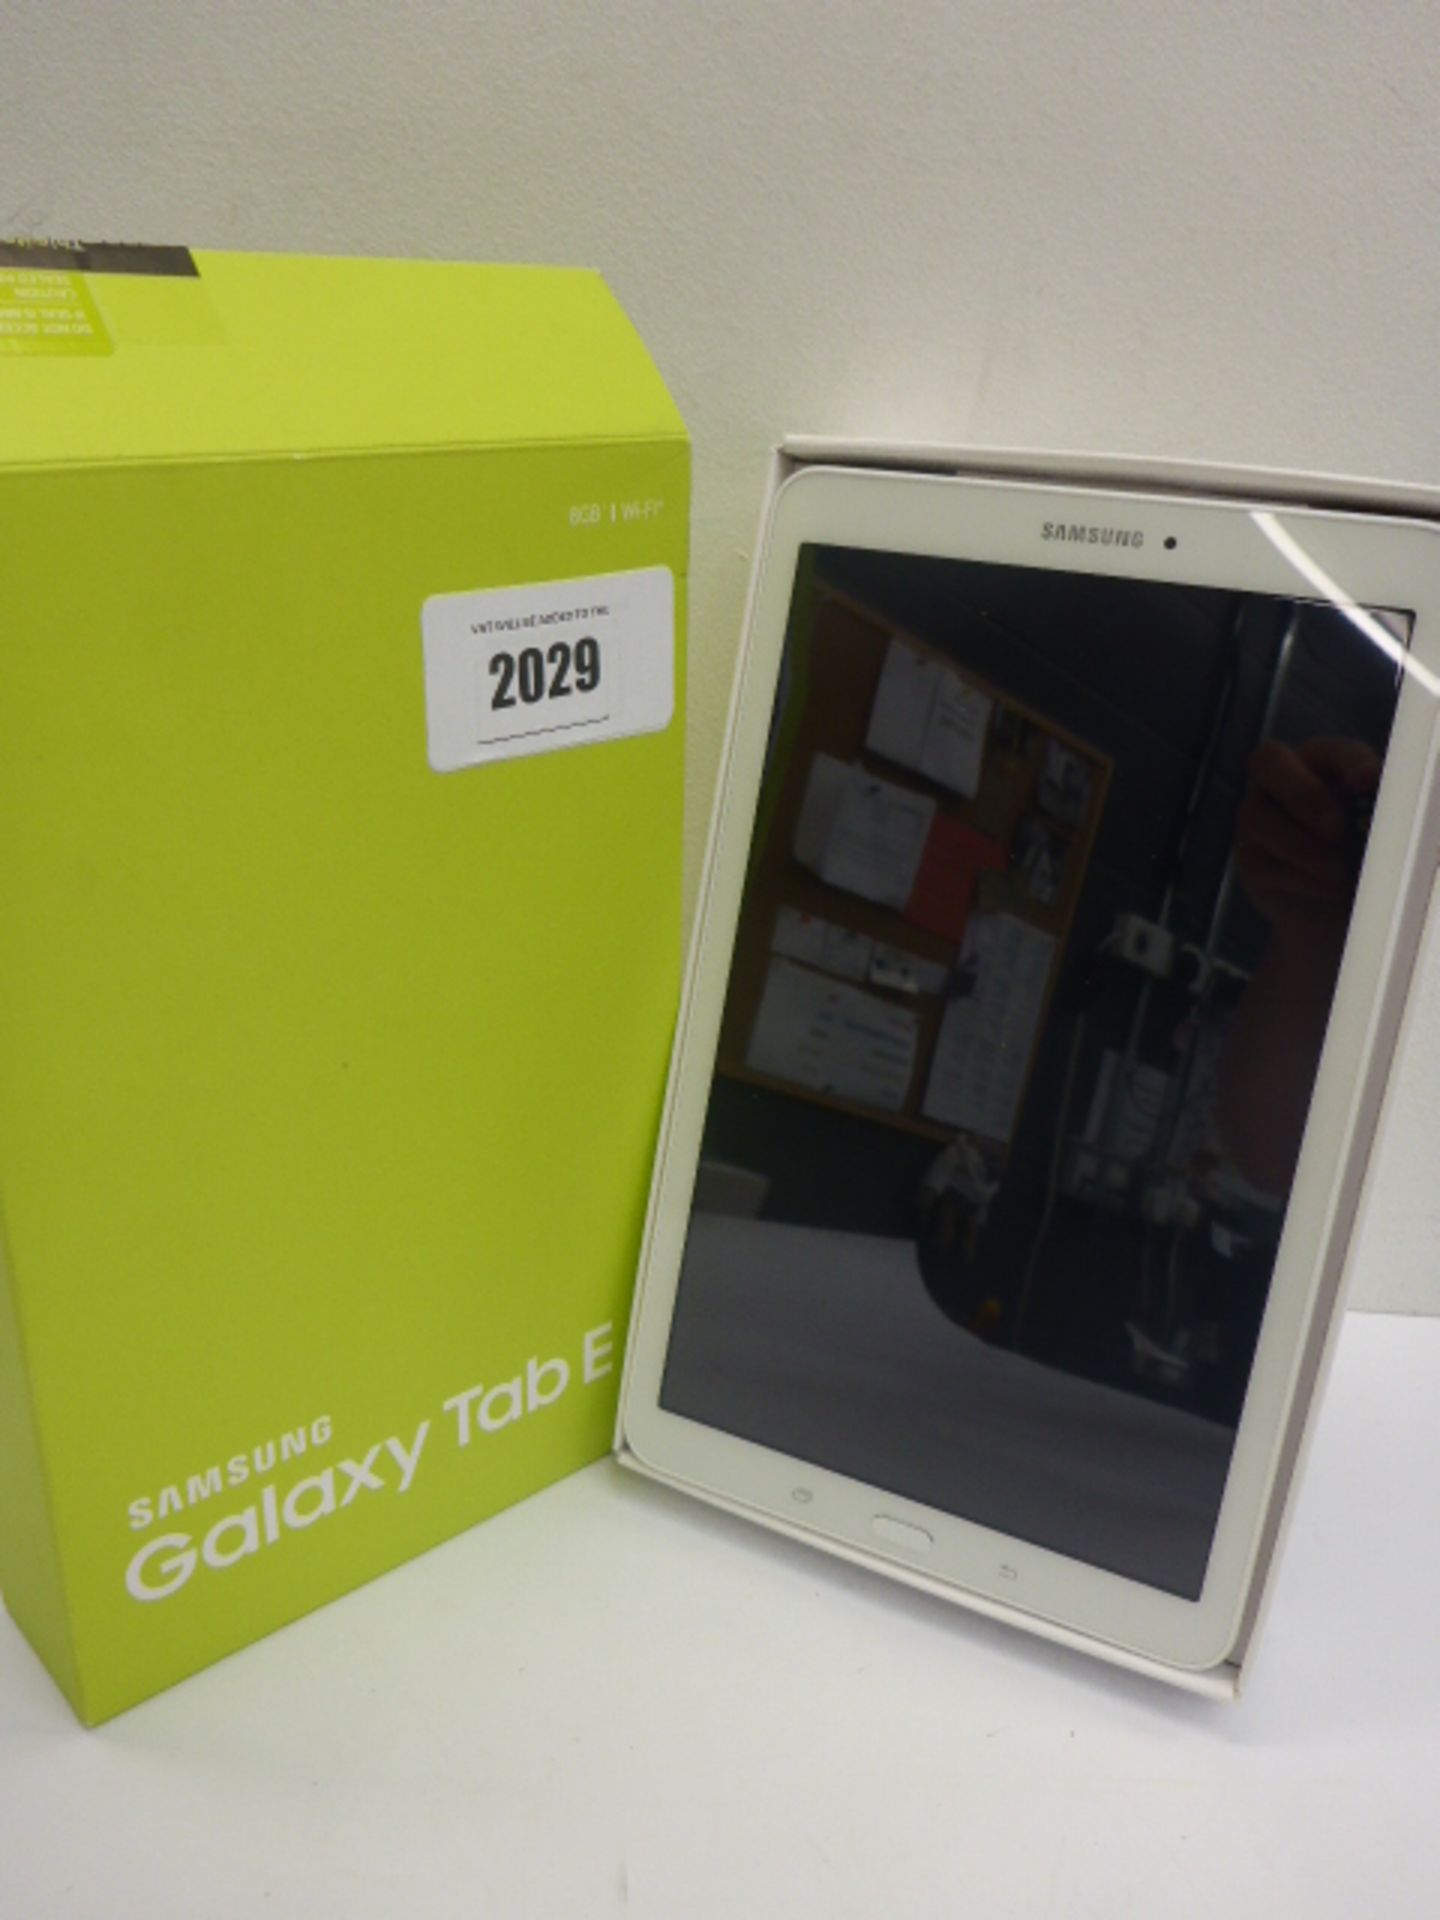 Samsung Galaxy Tab E 16GB in White